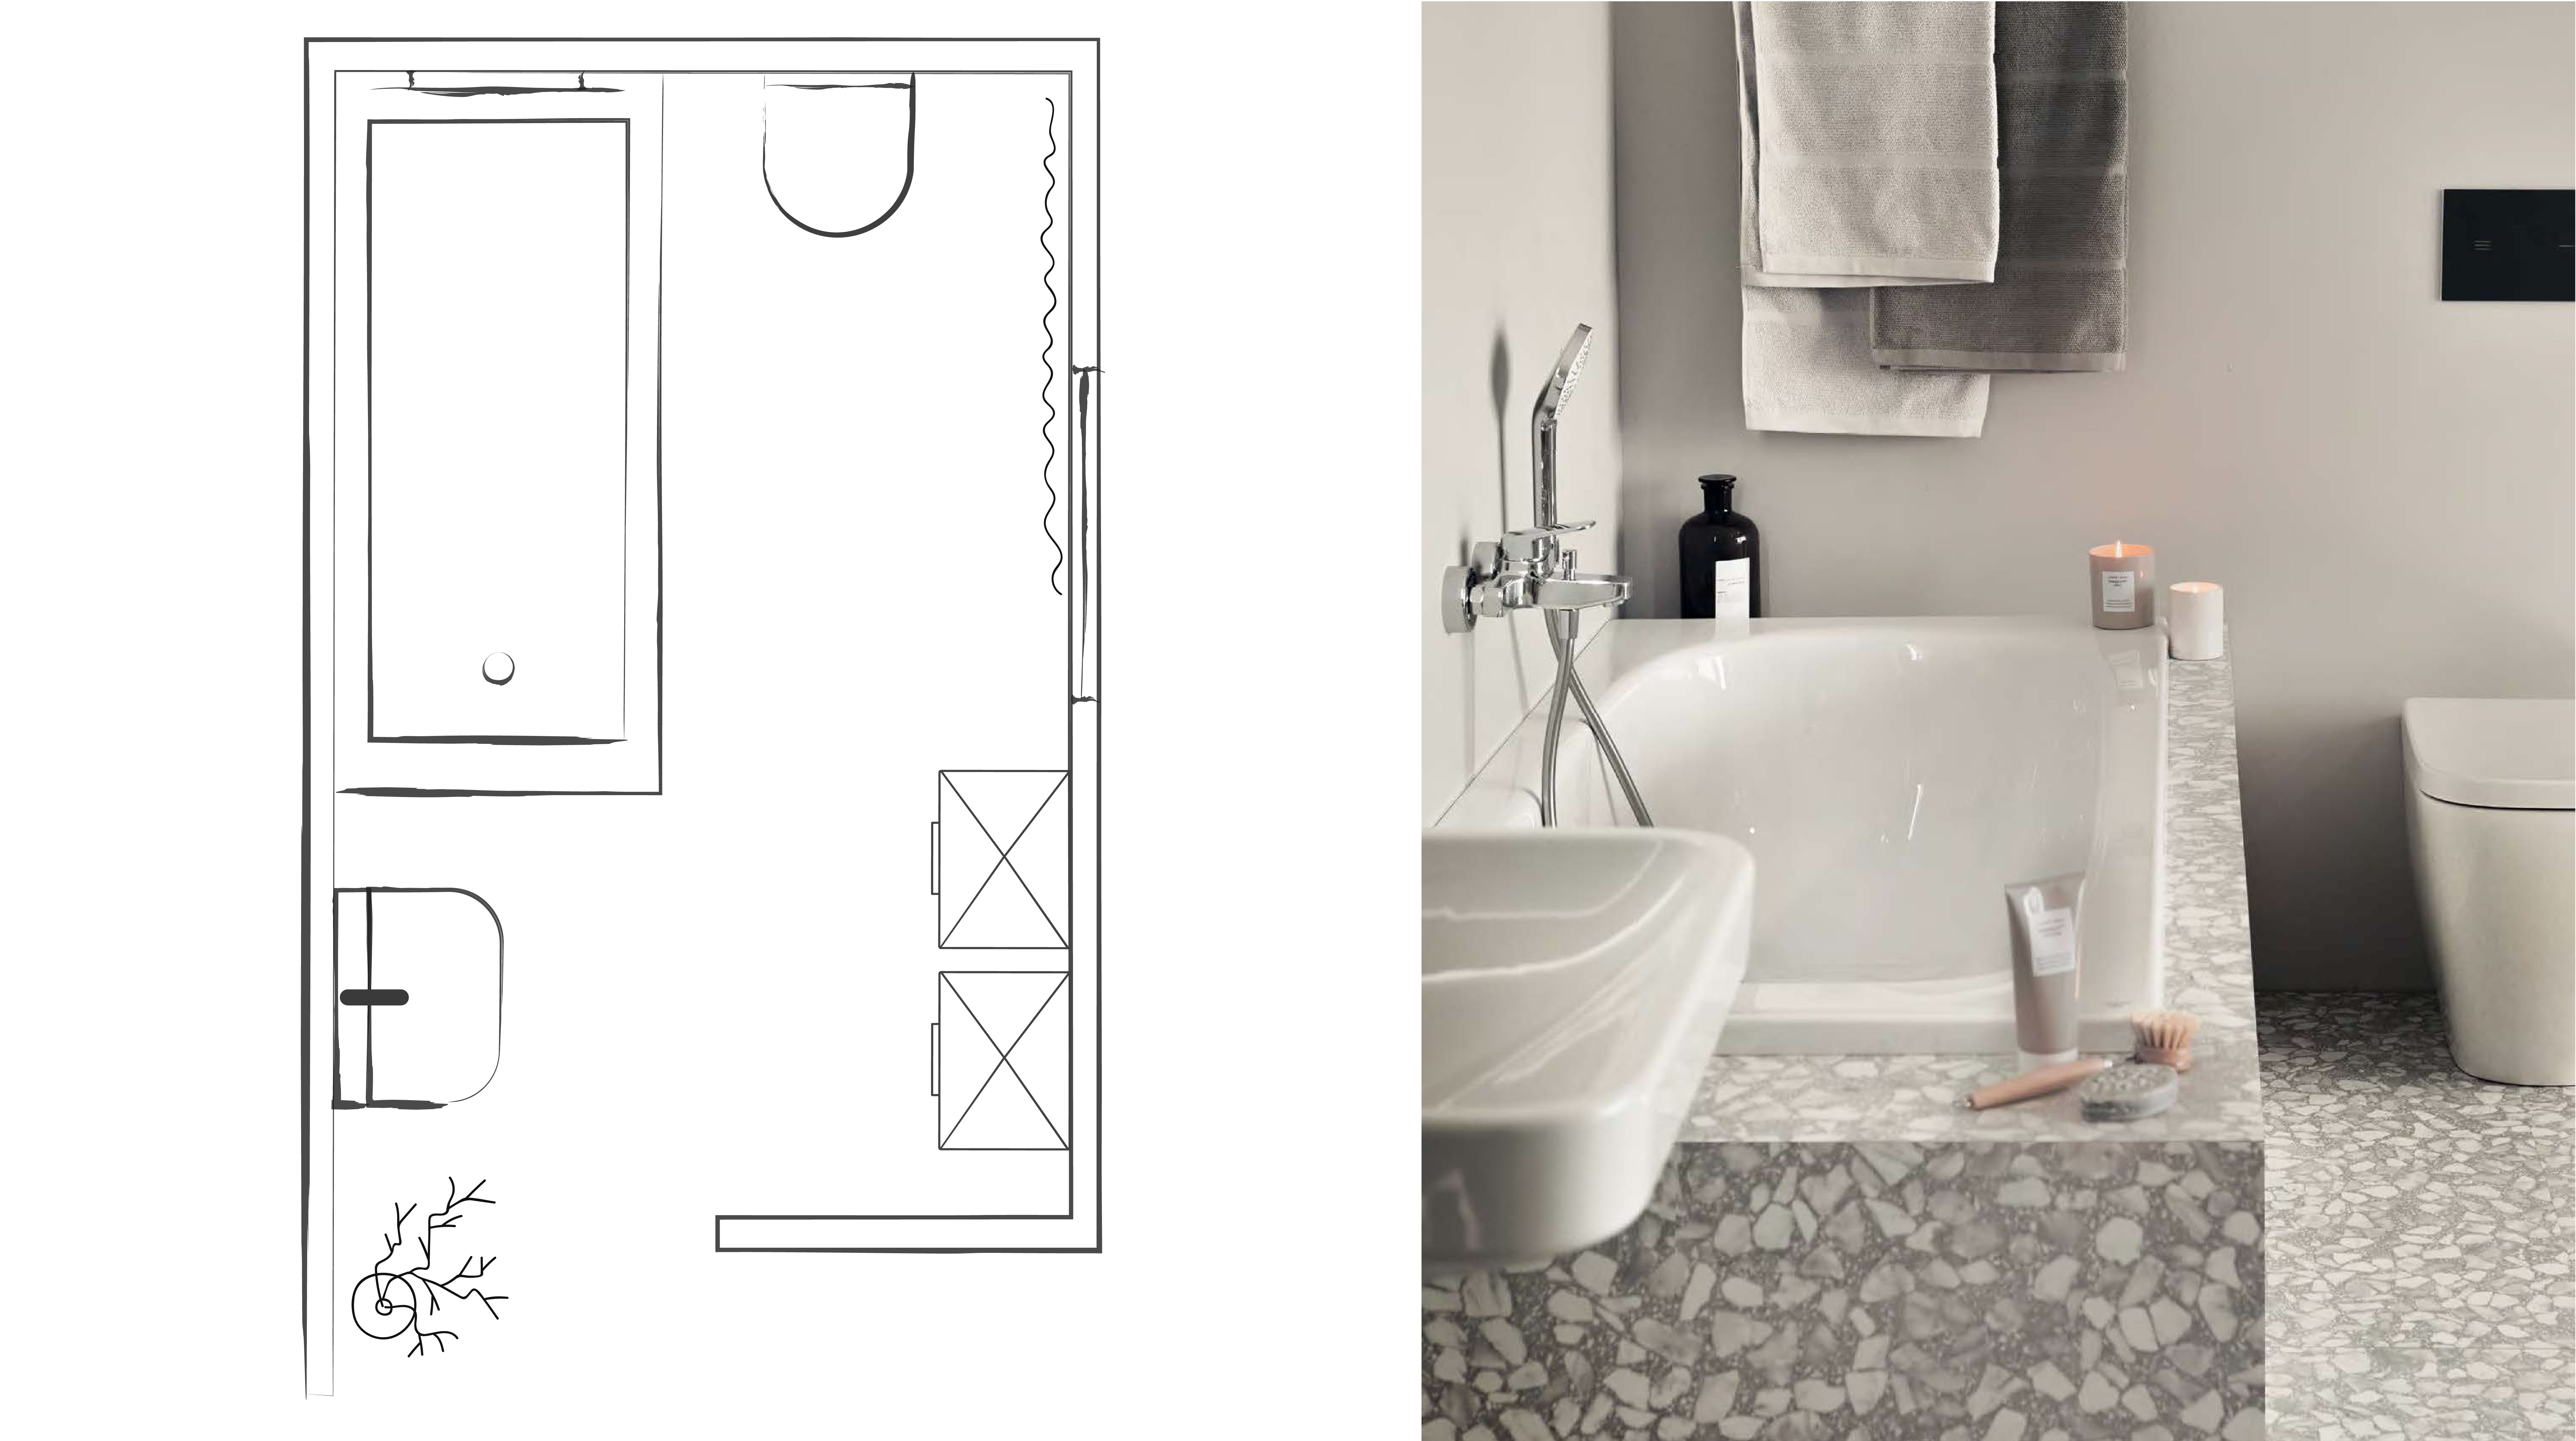 Plan van een kleine badkamer met bad, toilet, lavabo en  kolomkasten